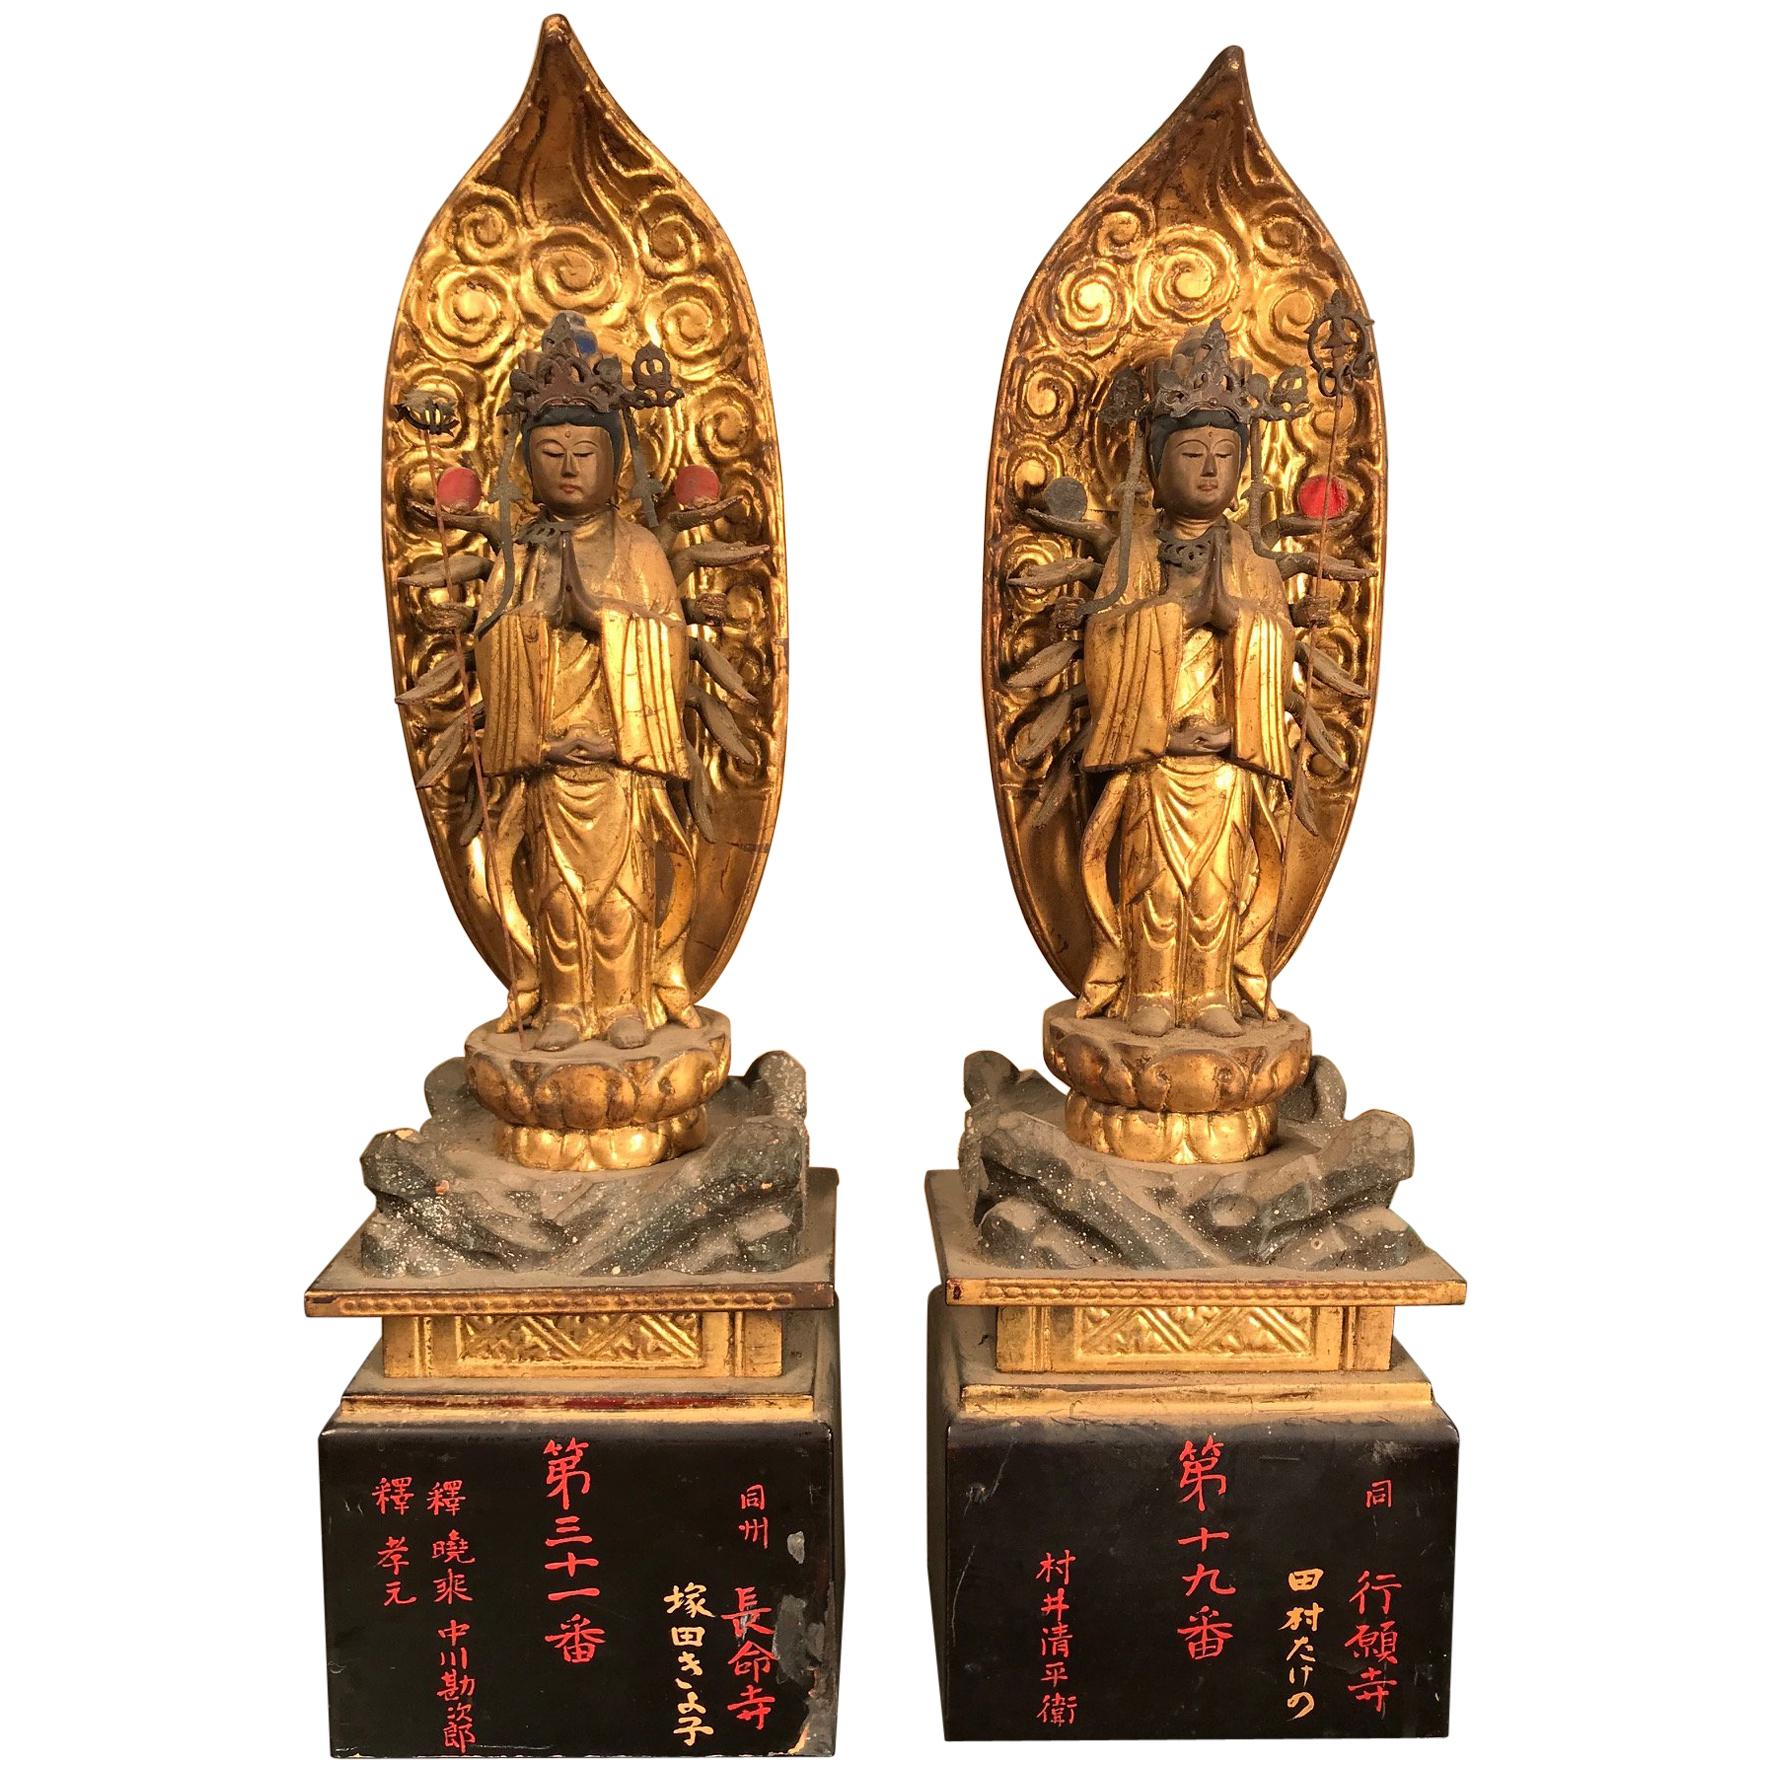 Japan Superb Pair of Gold Giltwood Guan Yin Kanons, Admiration & Prayer, Signed